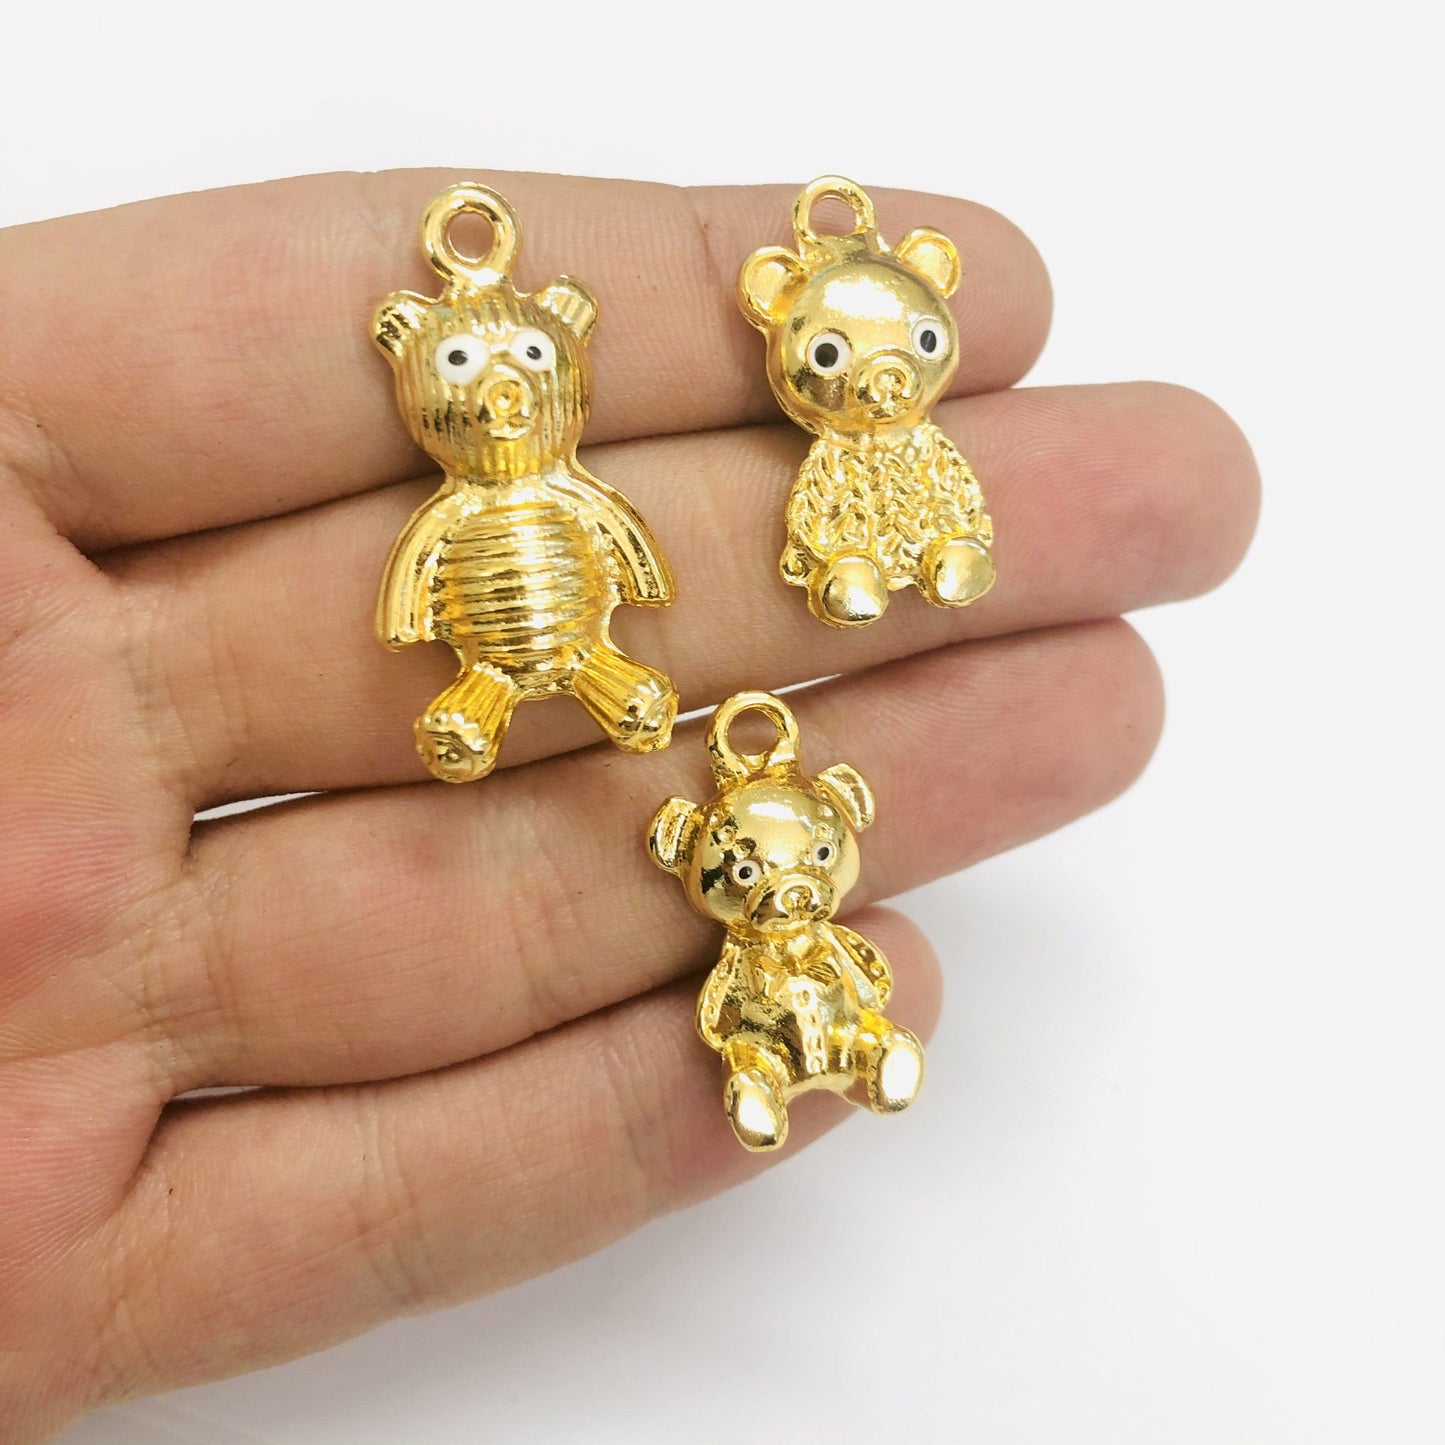 Vergoldetes Teddybär-Familienset – Vater, Mutter, Kind, weißes Auge